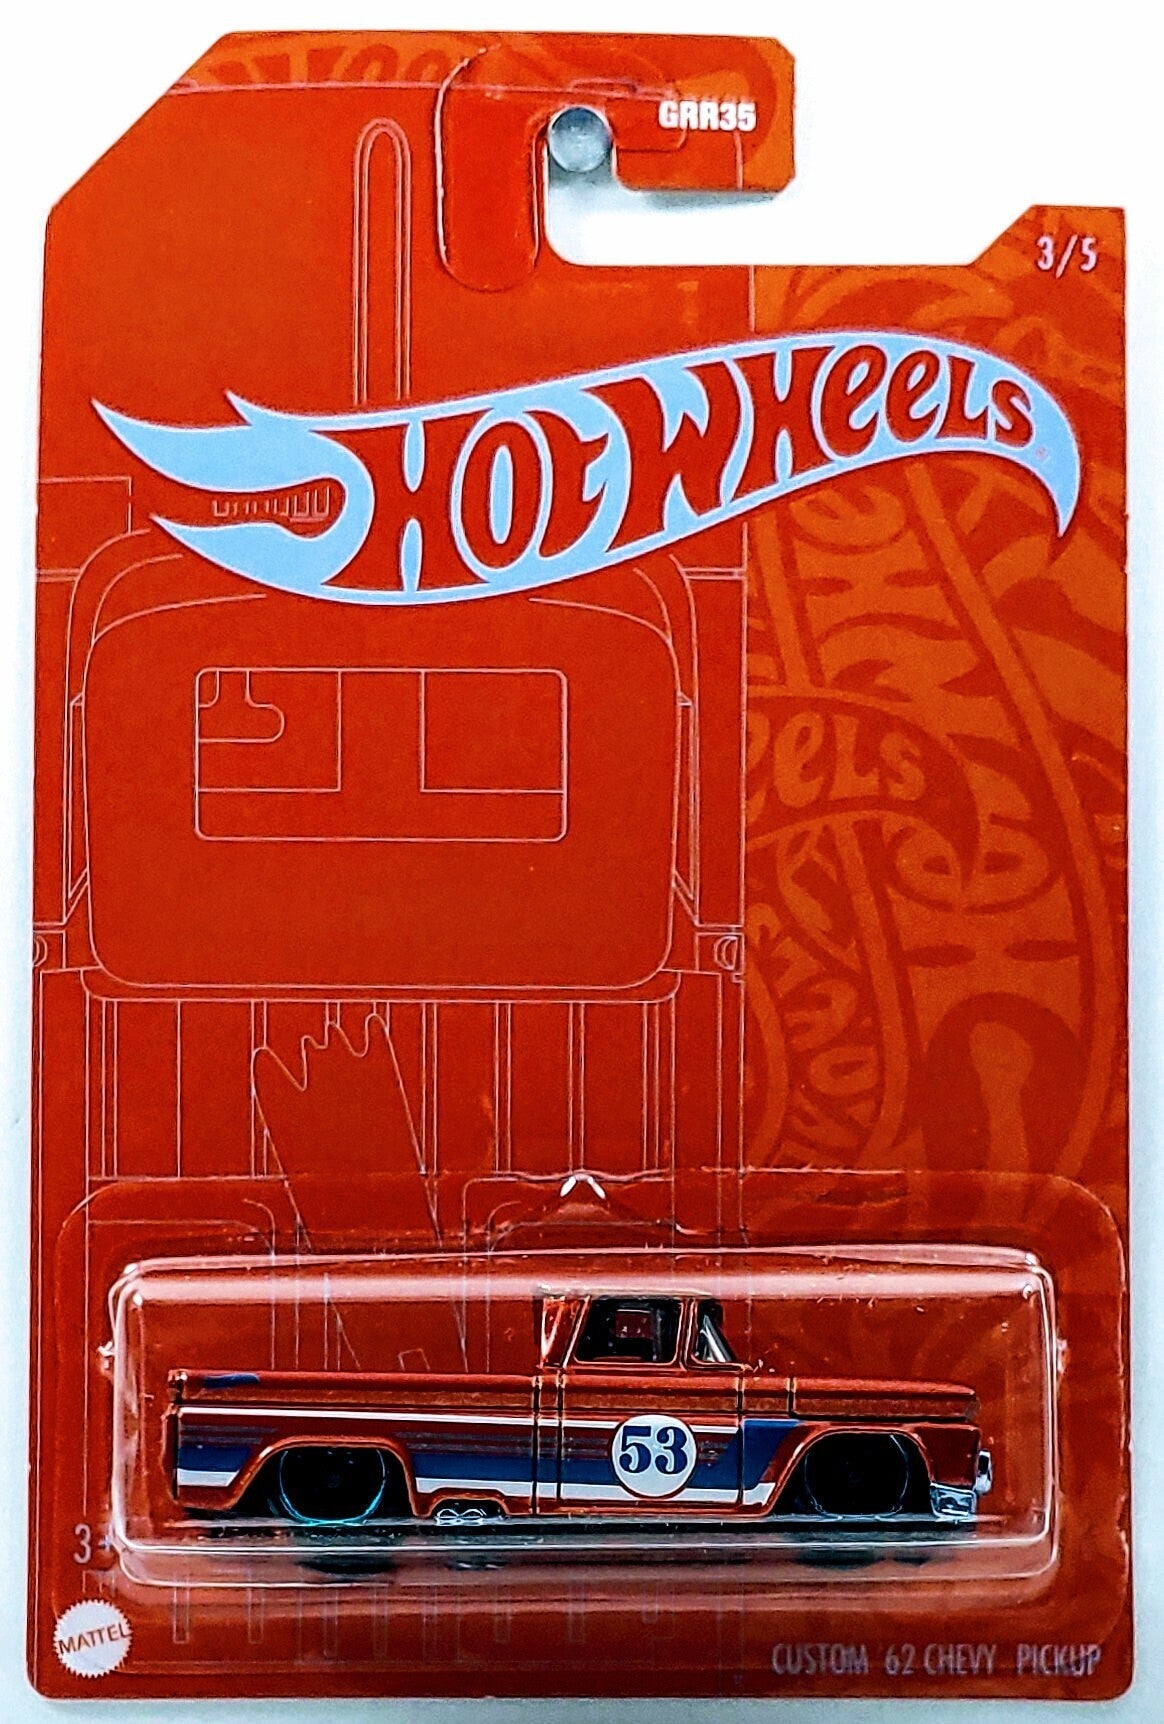 Hot Wheels 2021 - 53rd Anniversary / Orange and Blue 3/5 - Custom '62 Chevy Pickup - IC